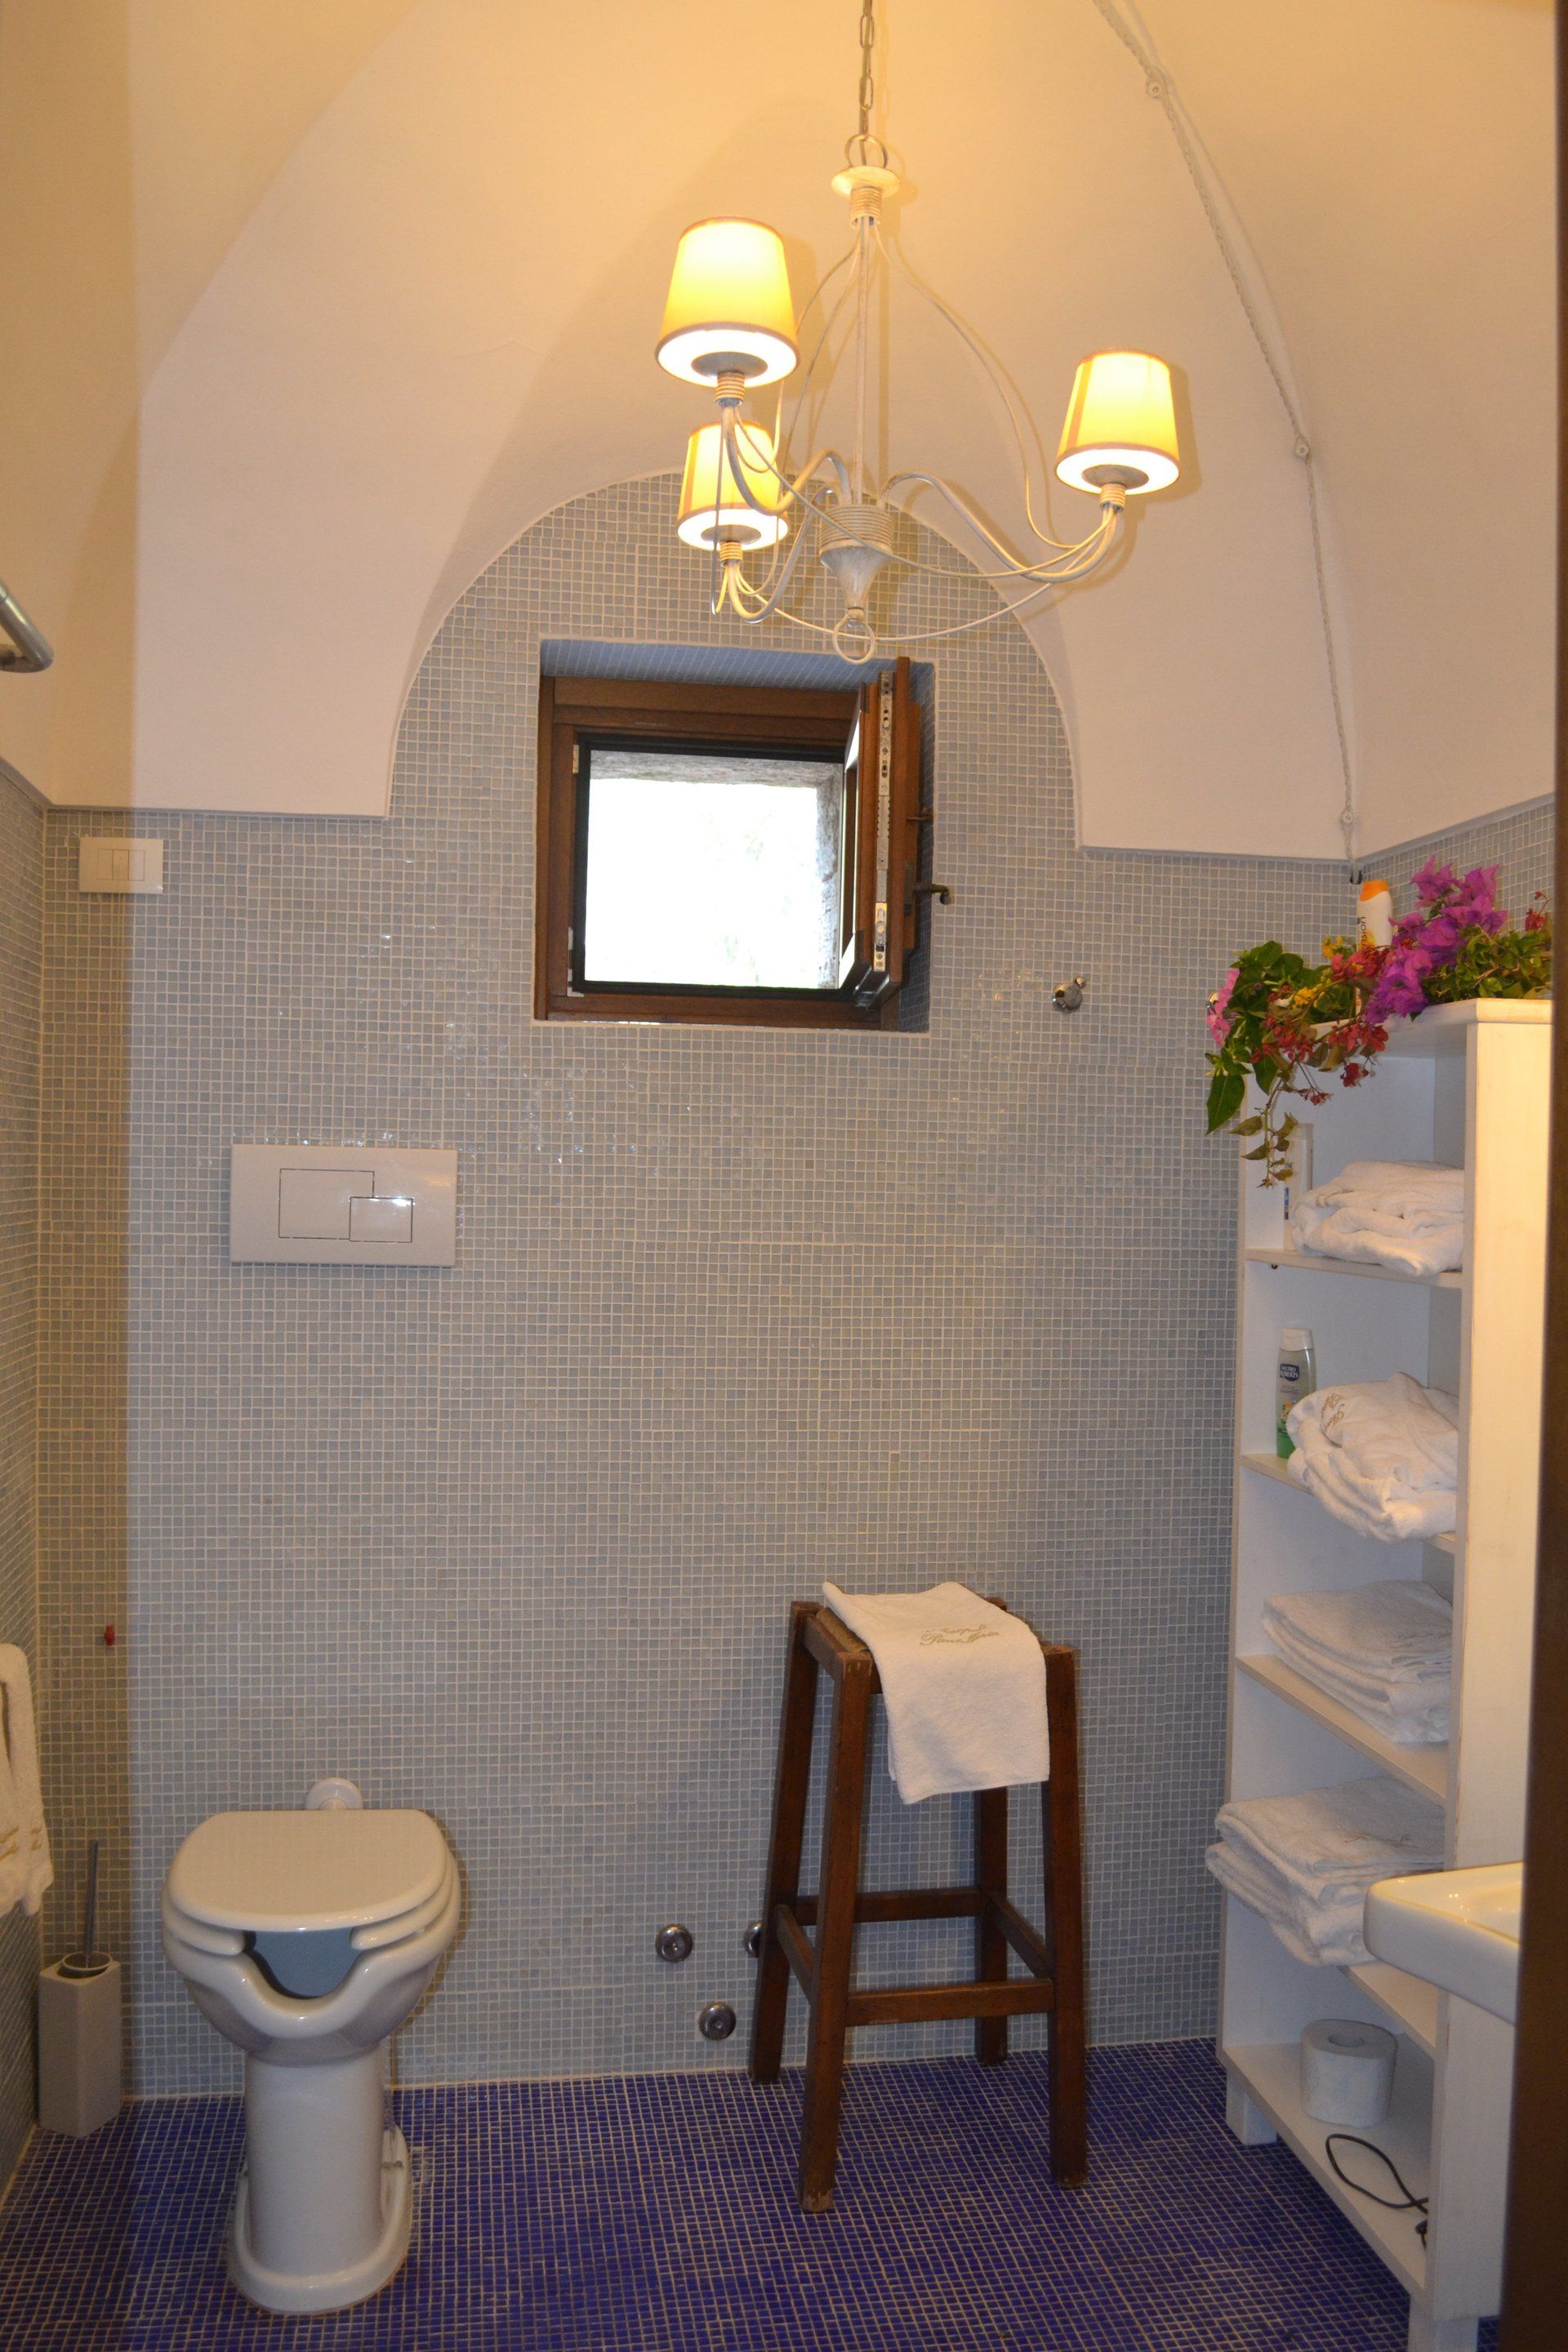 Salle de bain de la suite - dammuso turchese